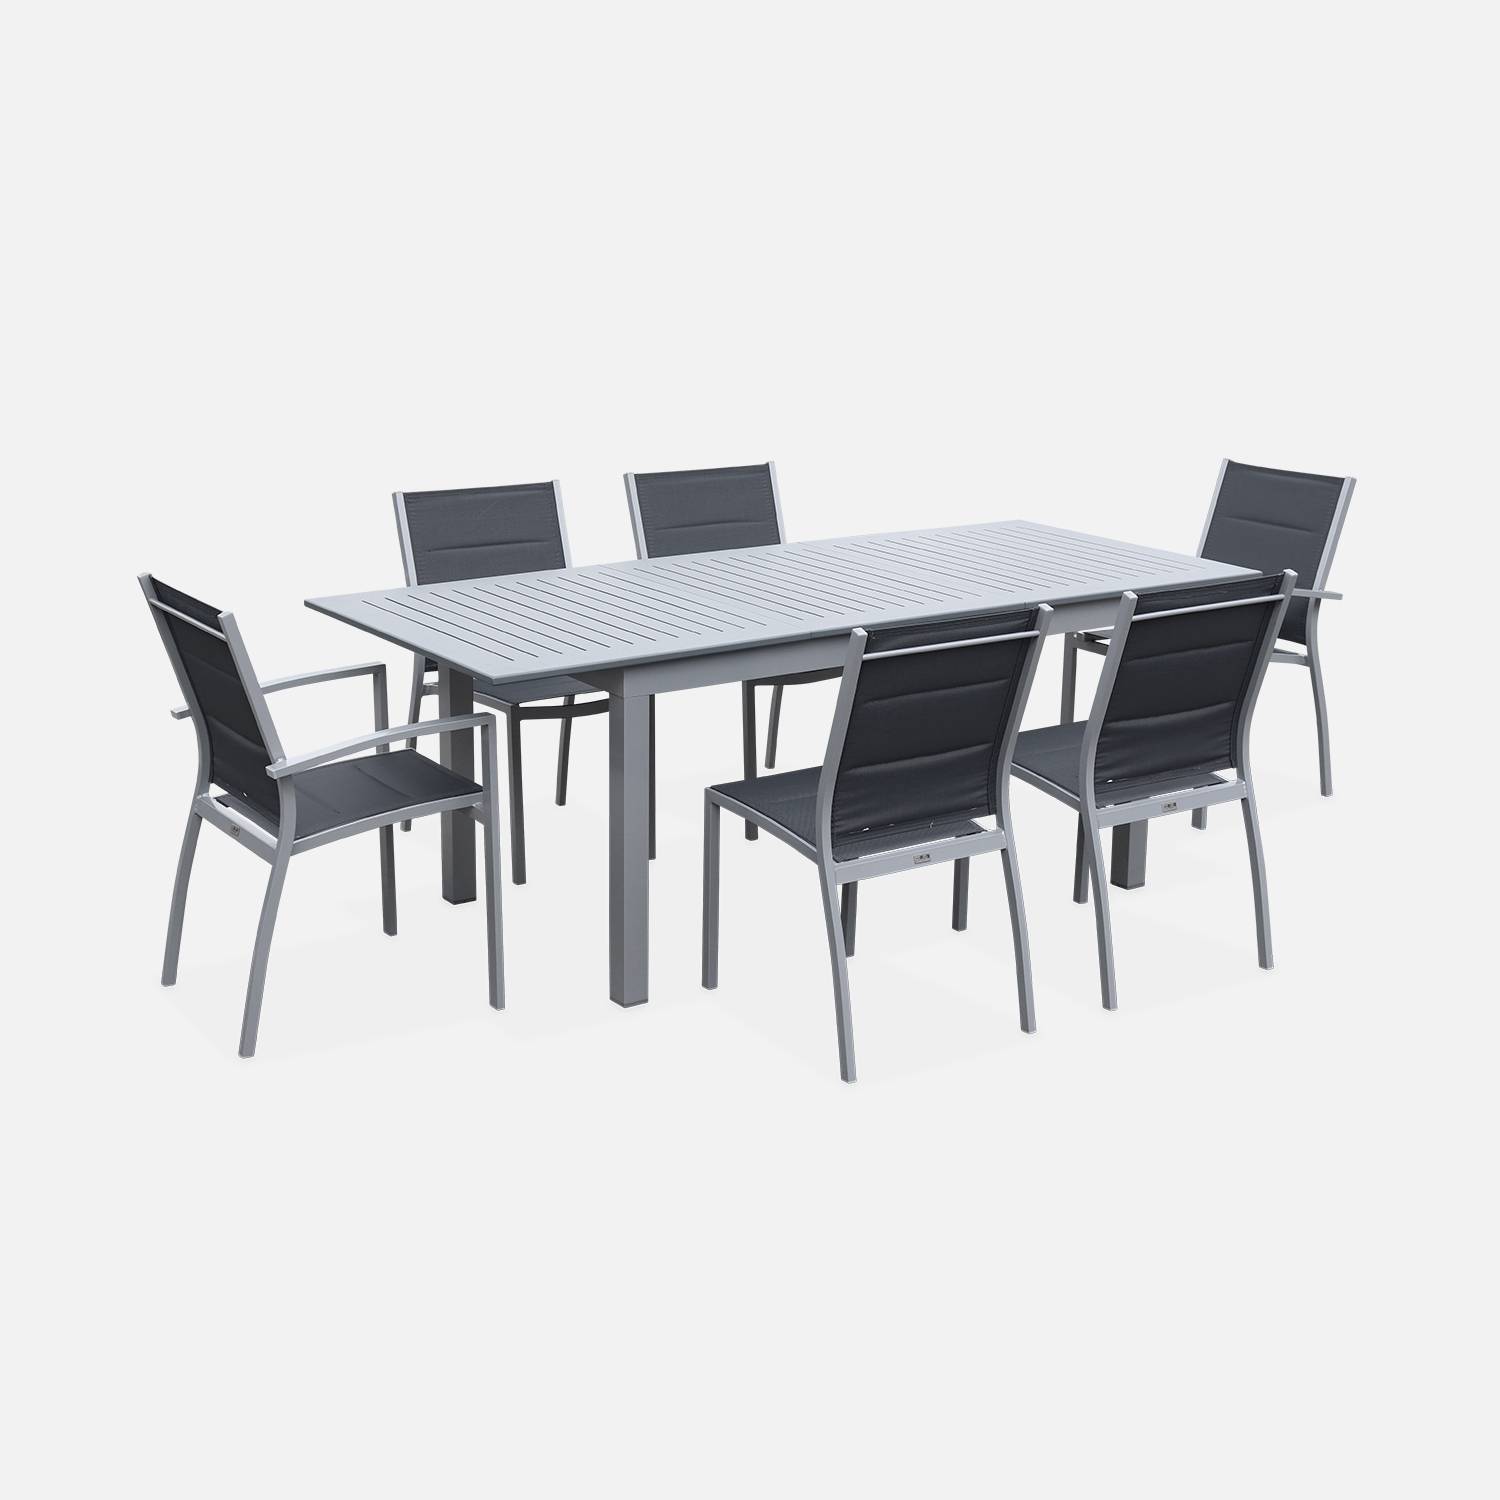 Set da giardino tavolo allungabile x6 alluminio textilene | sweeek